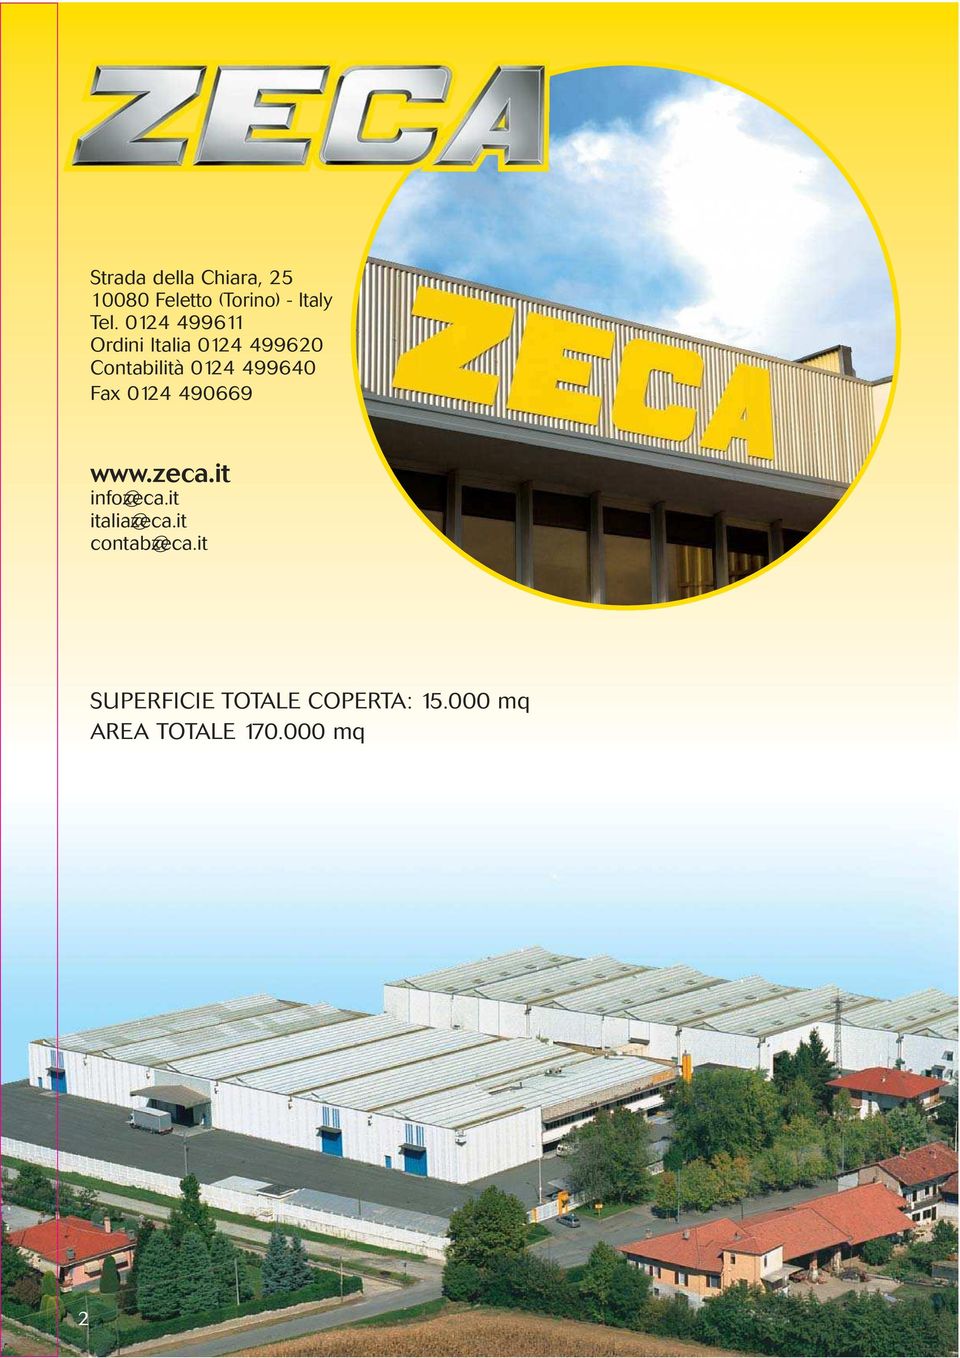 024 490669 www.zeca.it info@zeca.it italia@zeca.